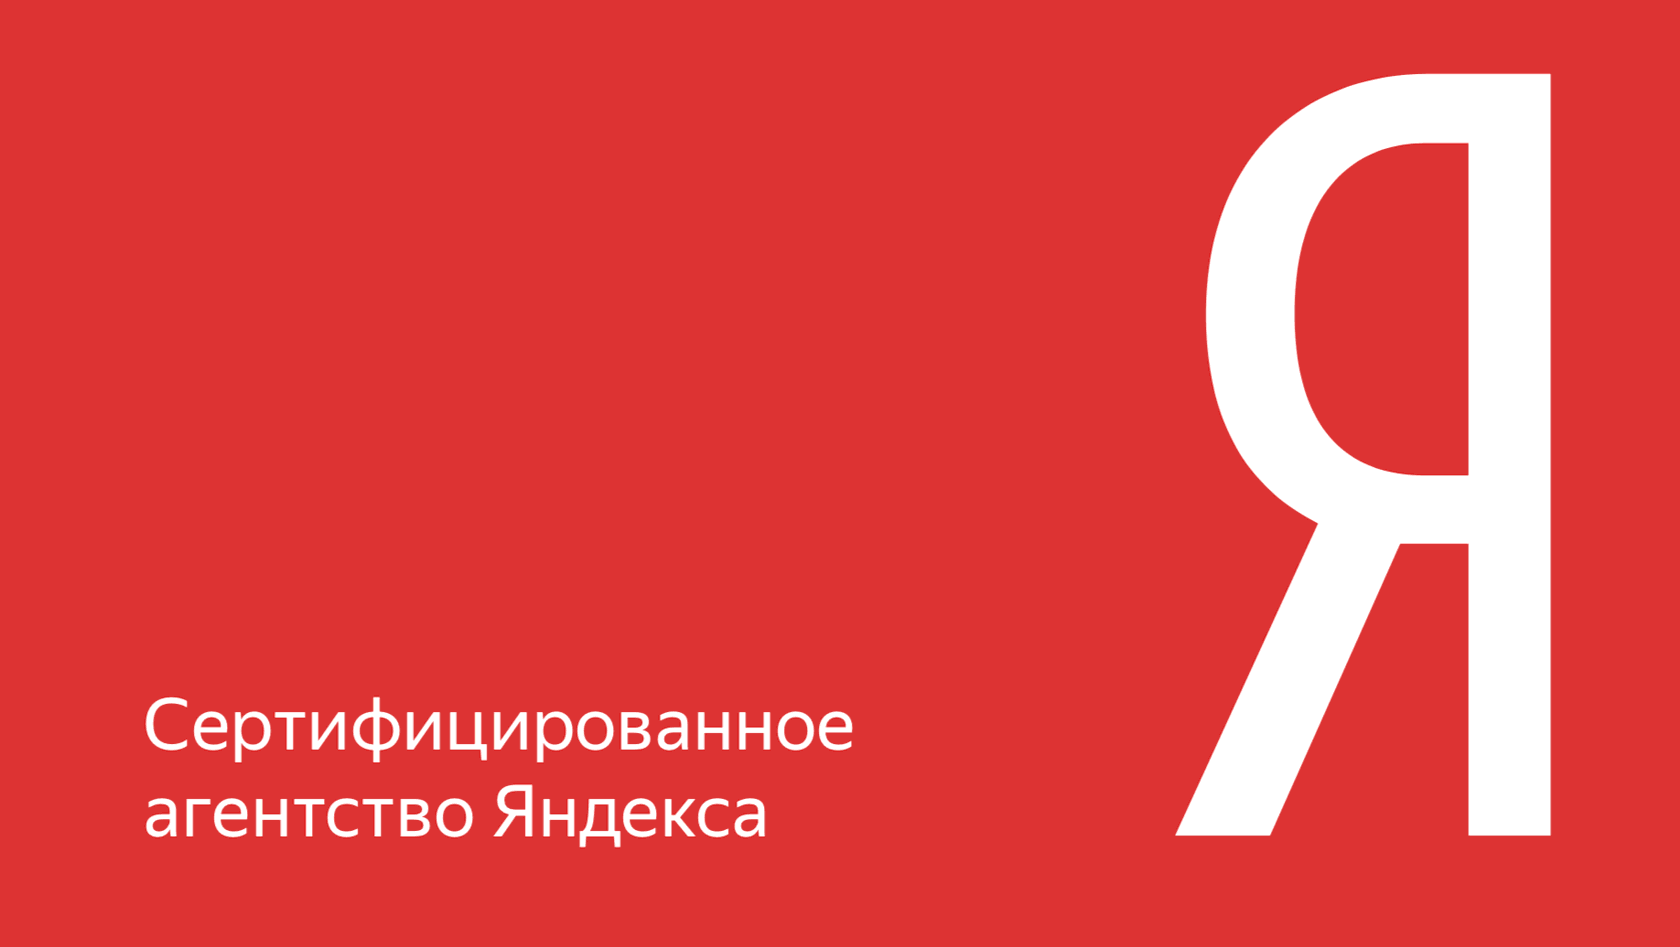 Сертифицированное агентство Яндекс